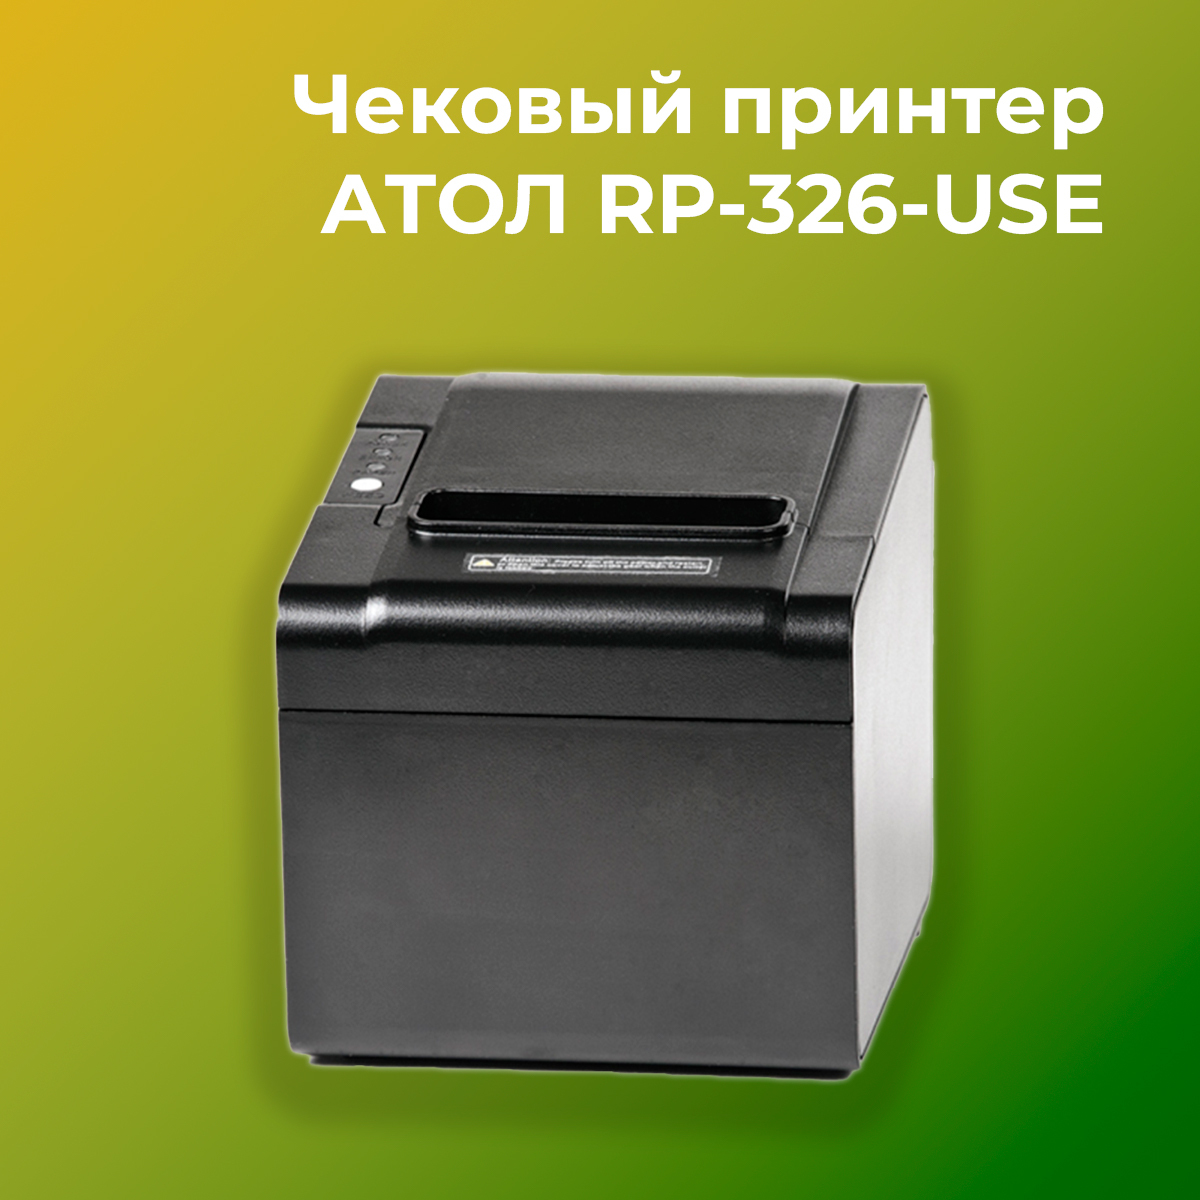 Принтер атол rp 326. Принтер чеков Атол 326. Принтер чеков Атол Rp-326. Чековый принтер Атол rp326 use. Атол Rp-326-use.